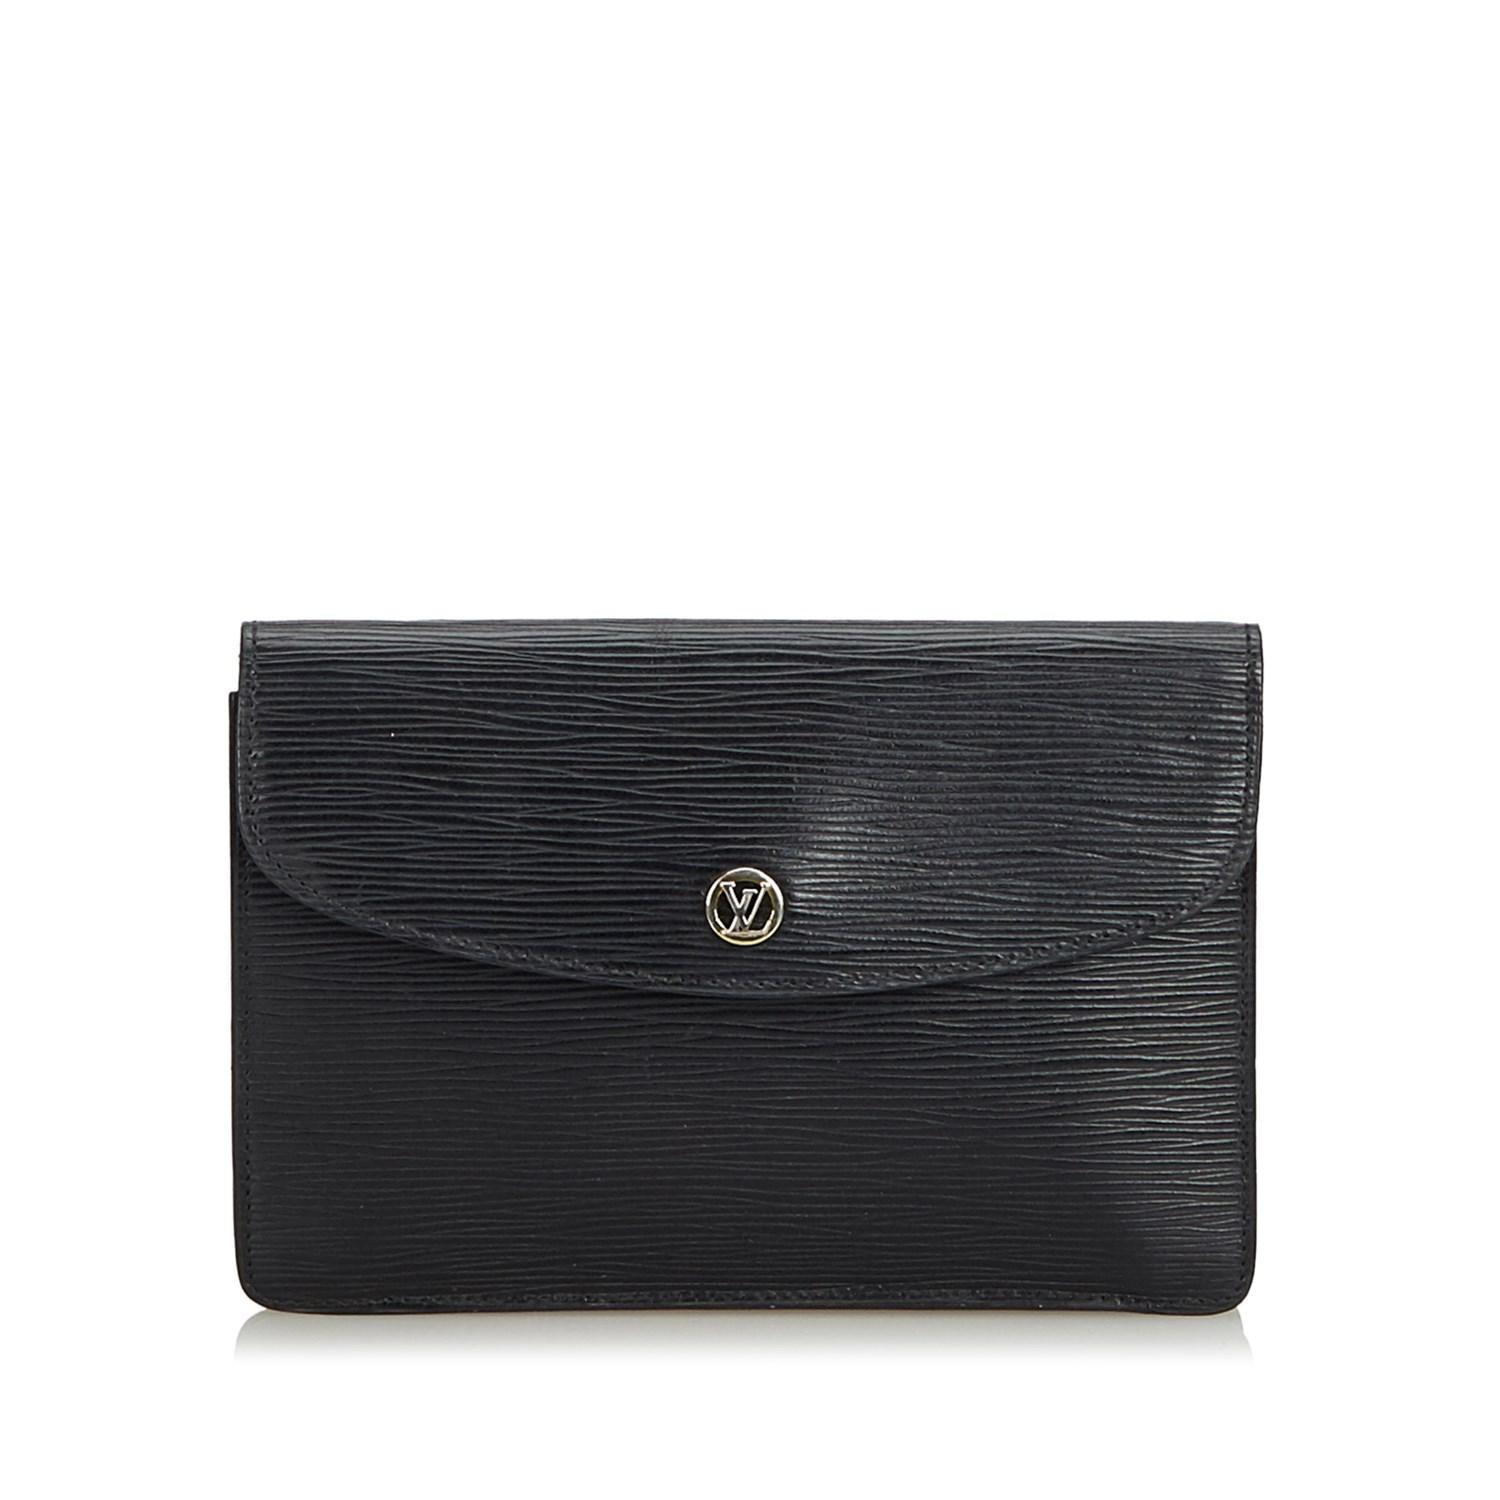 Louis Vuitton Epi Clutch Bag in Black - Lyst